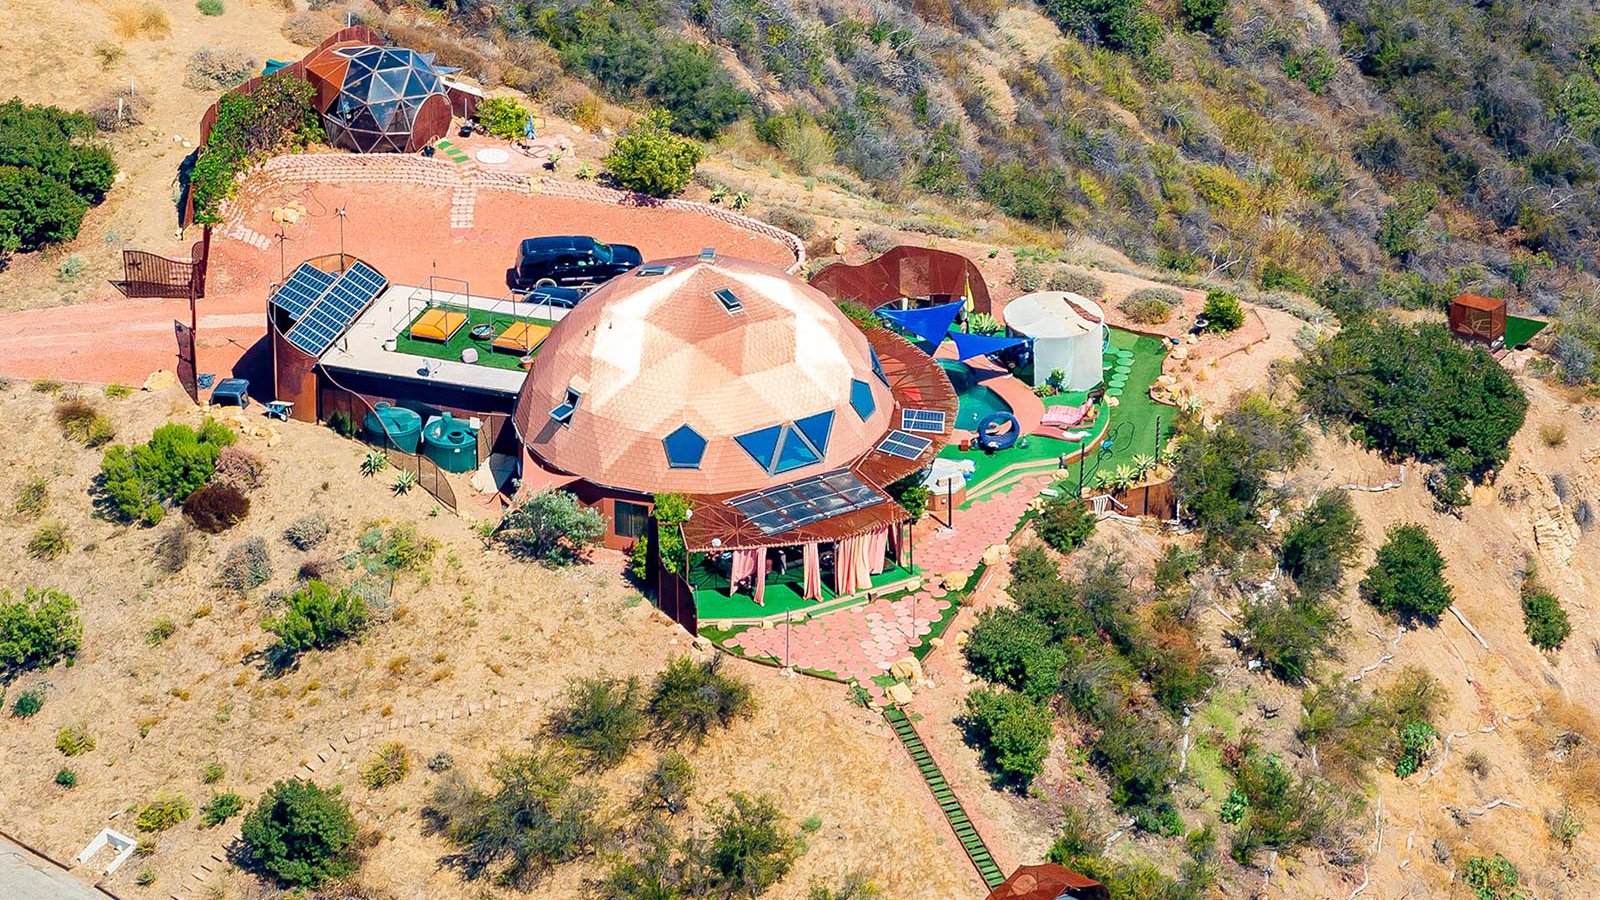 Residential real estate close-up photo of Copper Dome home in Malibu, California